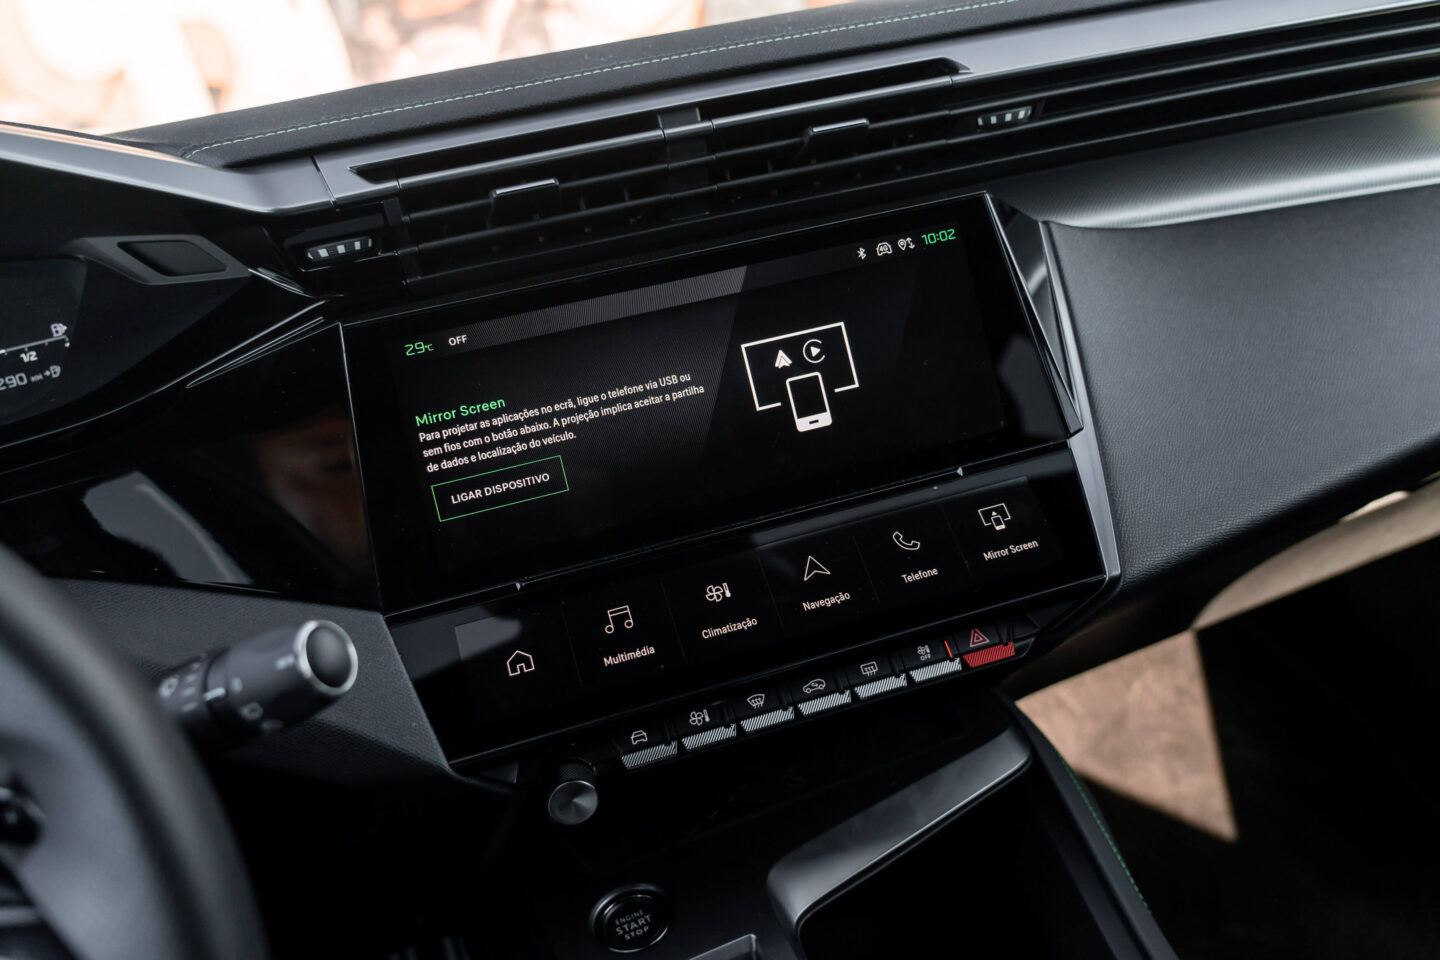 Peugeot 308 SW pormenor consola central